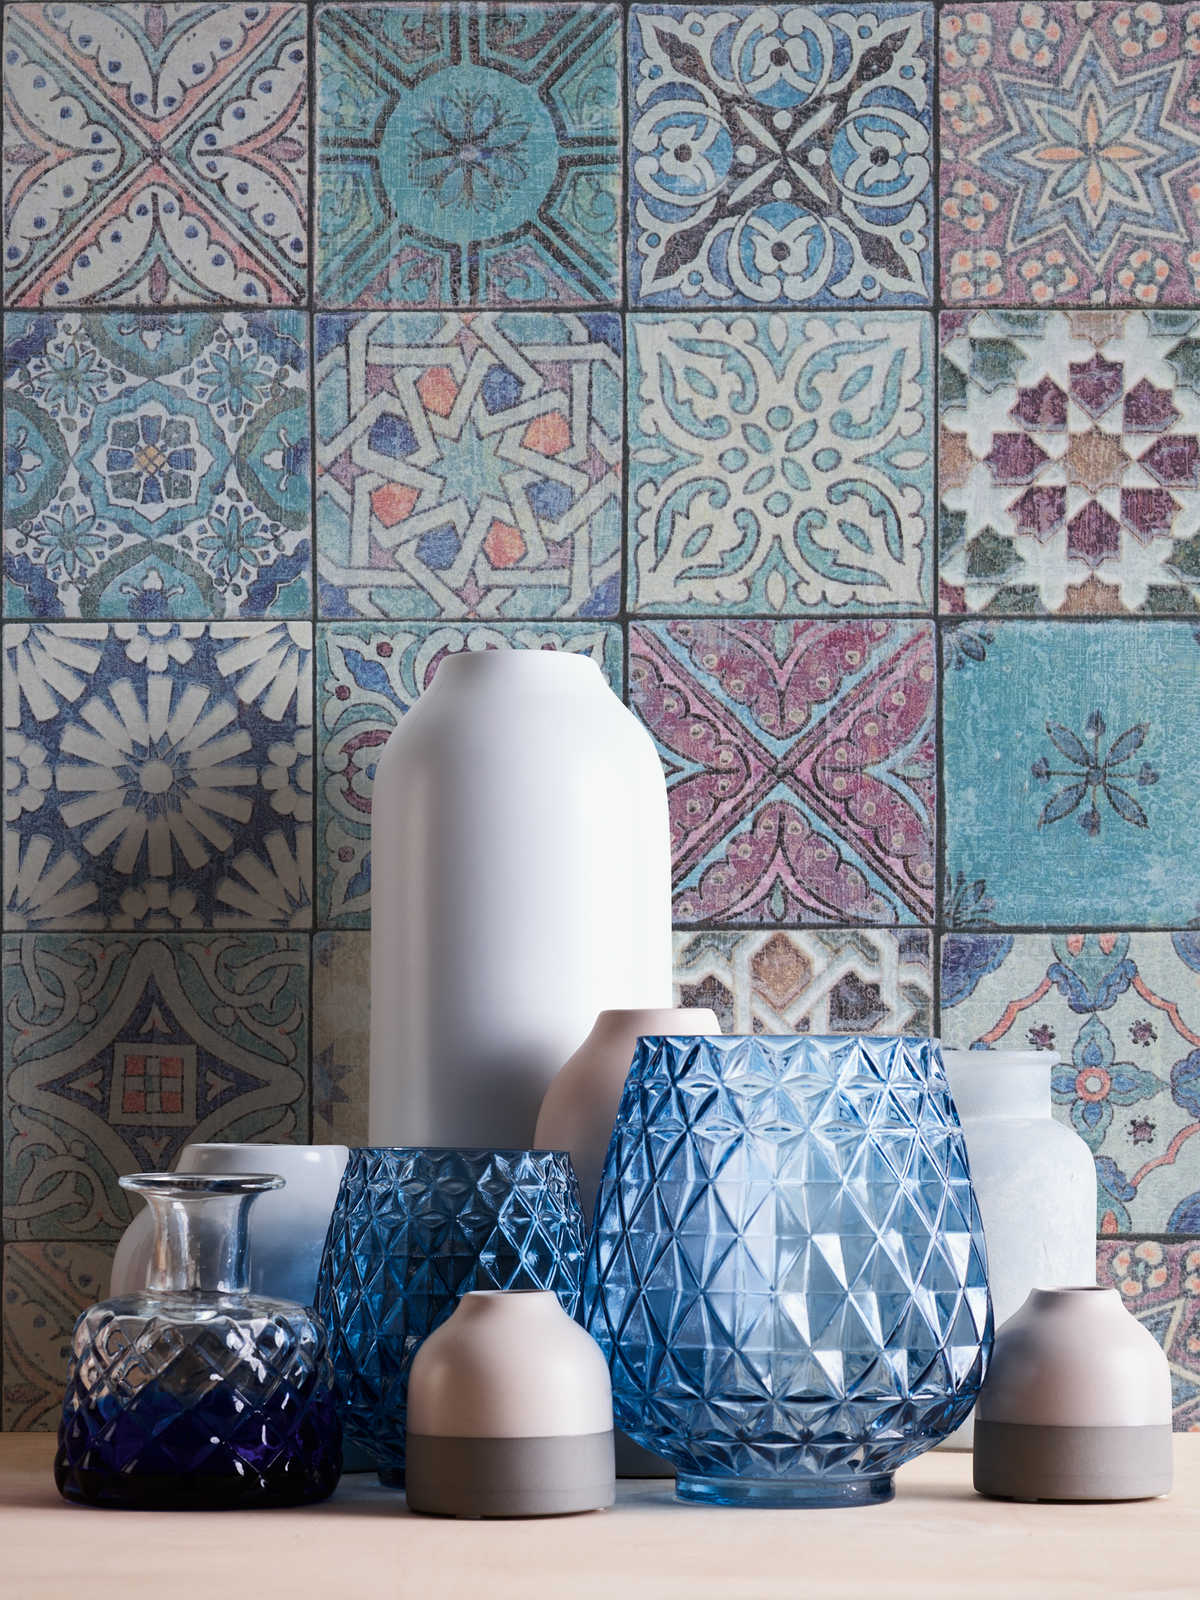             Selbstklebende Fliesen Tapete Vintage Mosaikmuster – Bunt, Blau, Violett
        